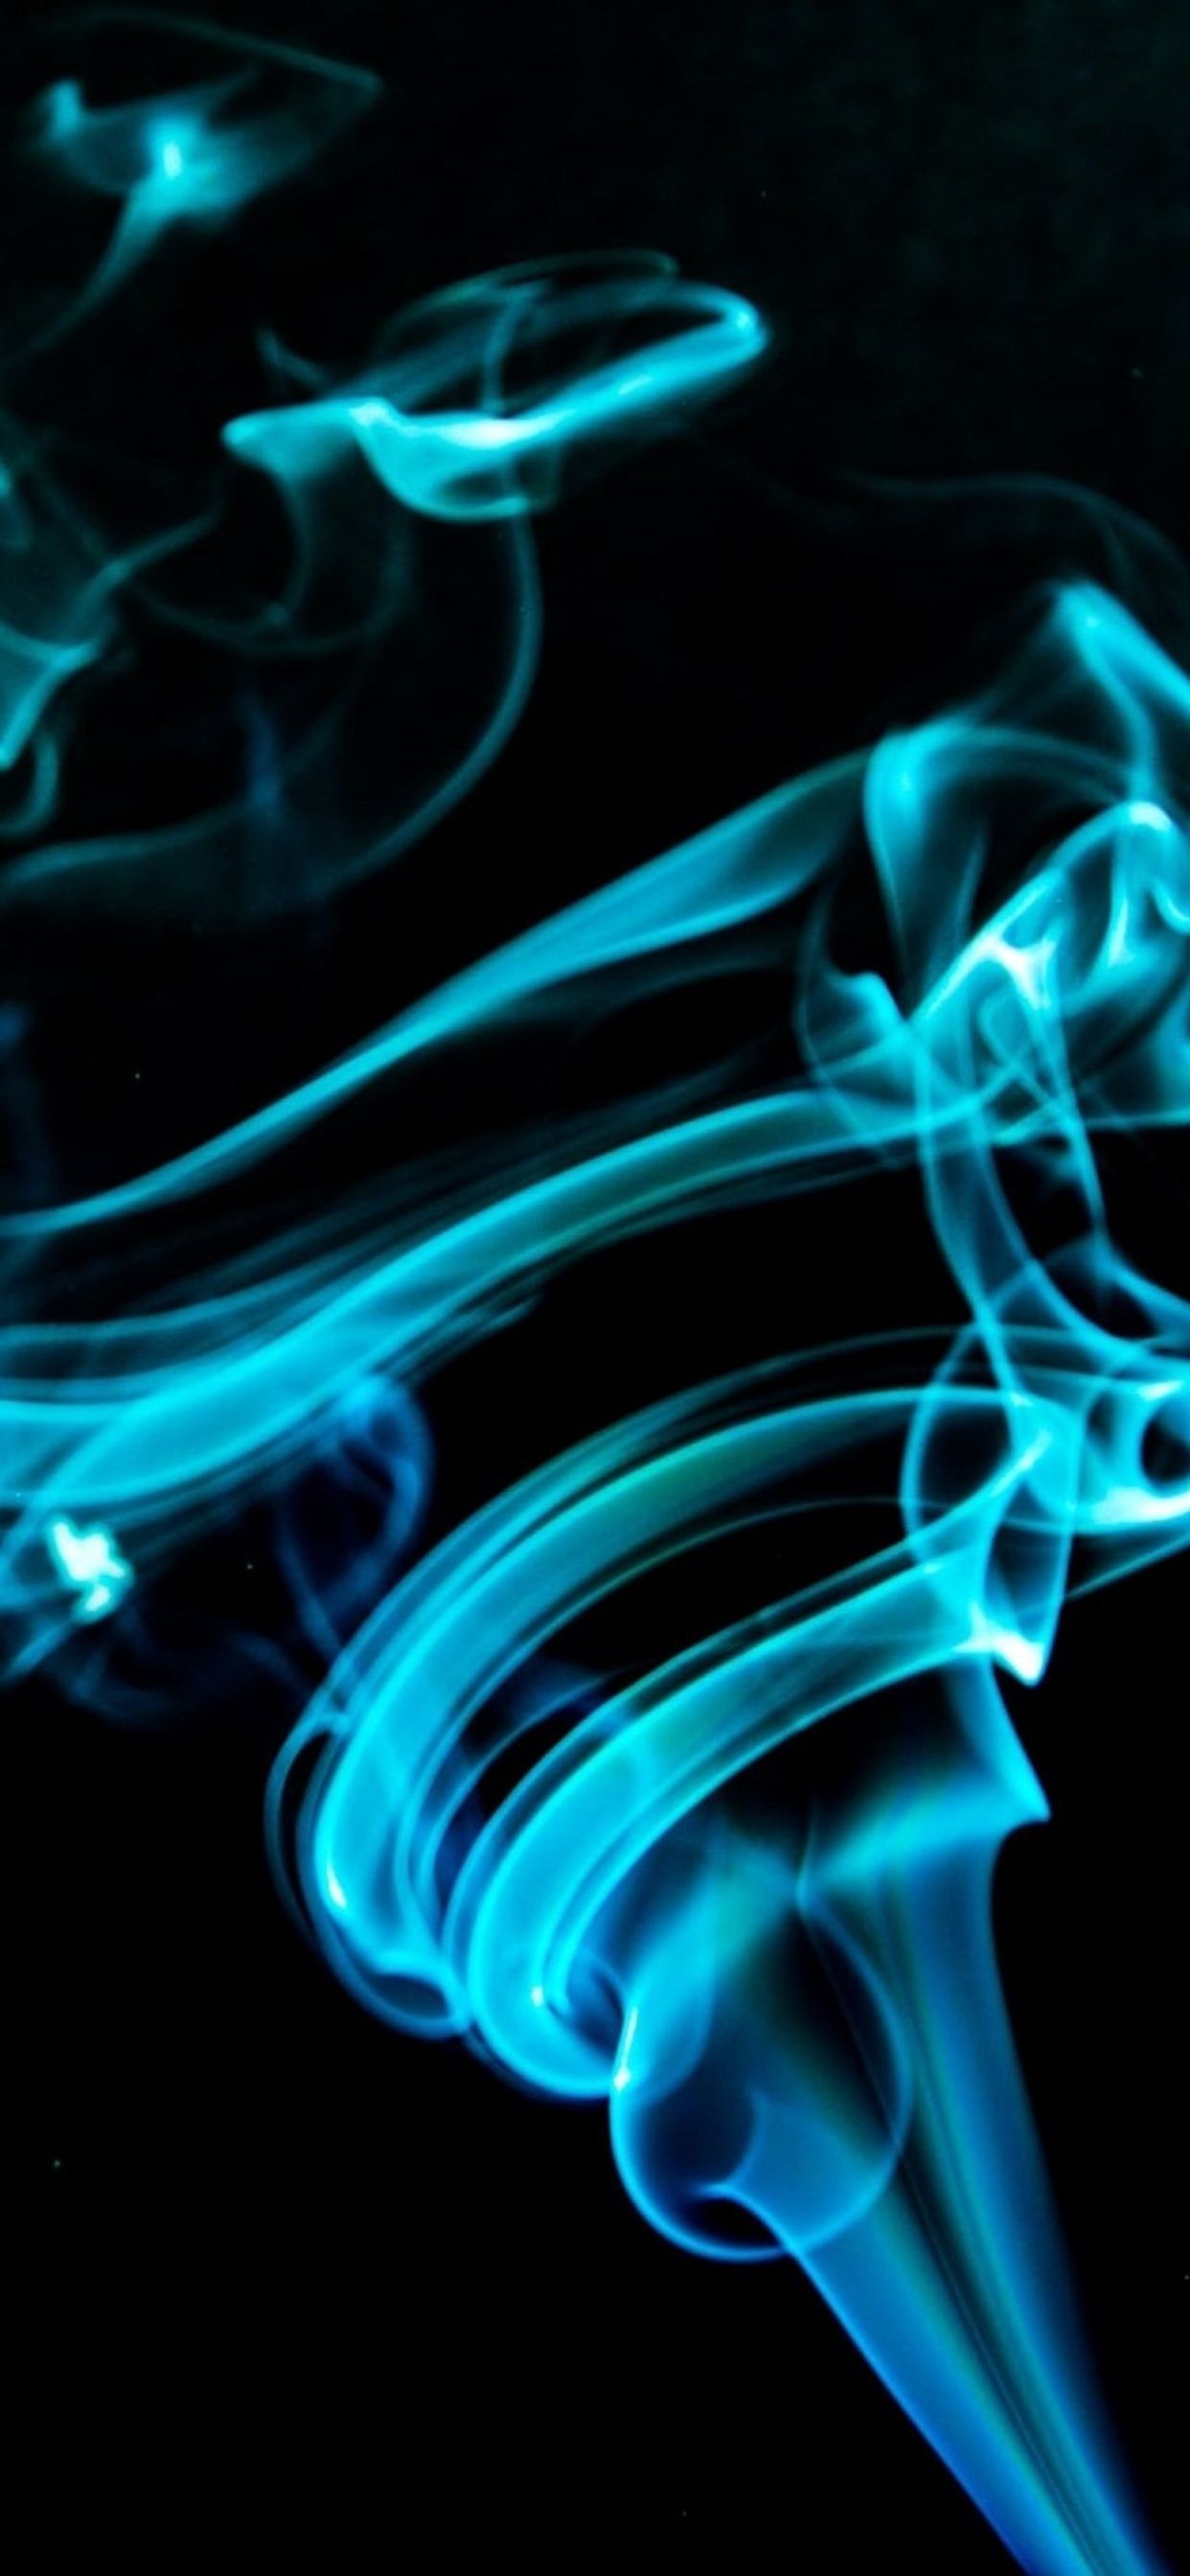 Abstract Smoke Flame iPhone XS MAX HD 4k Wallpaper